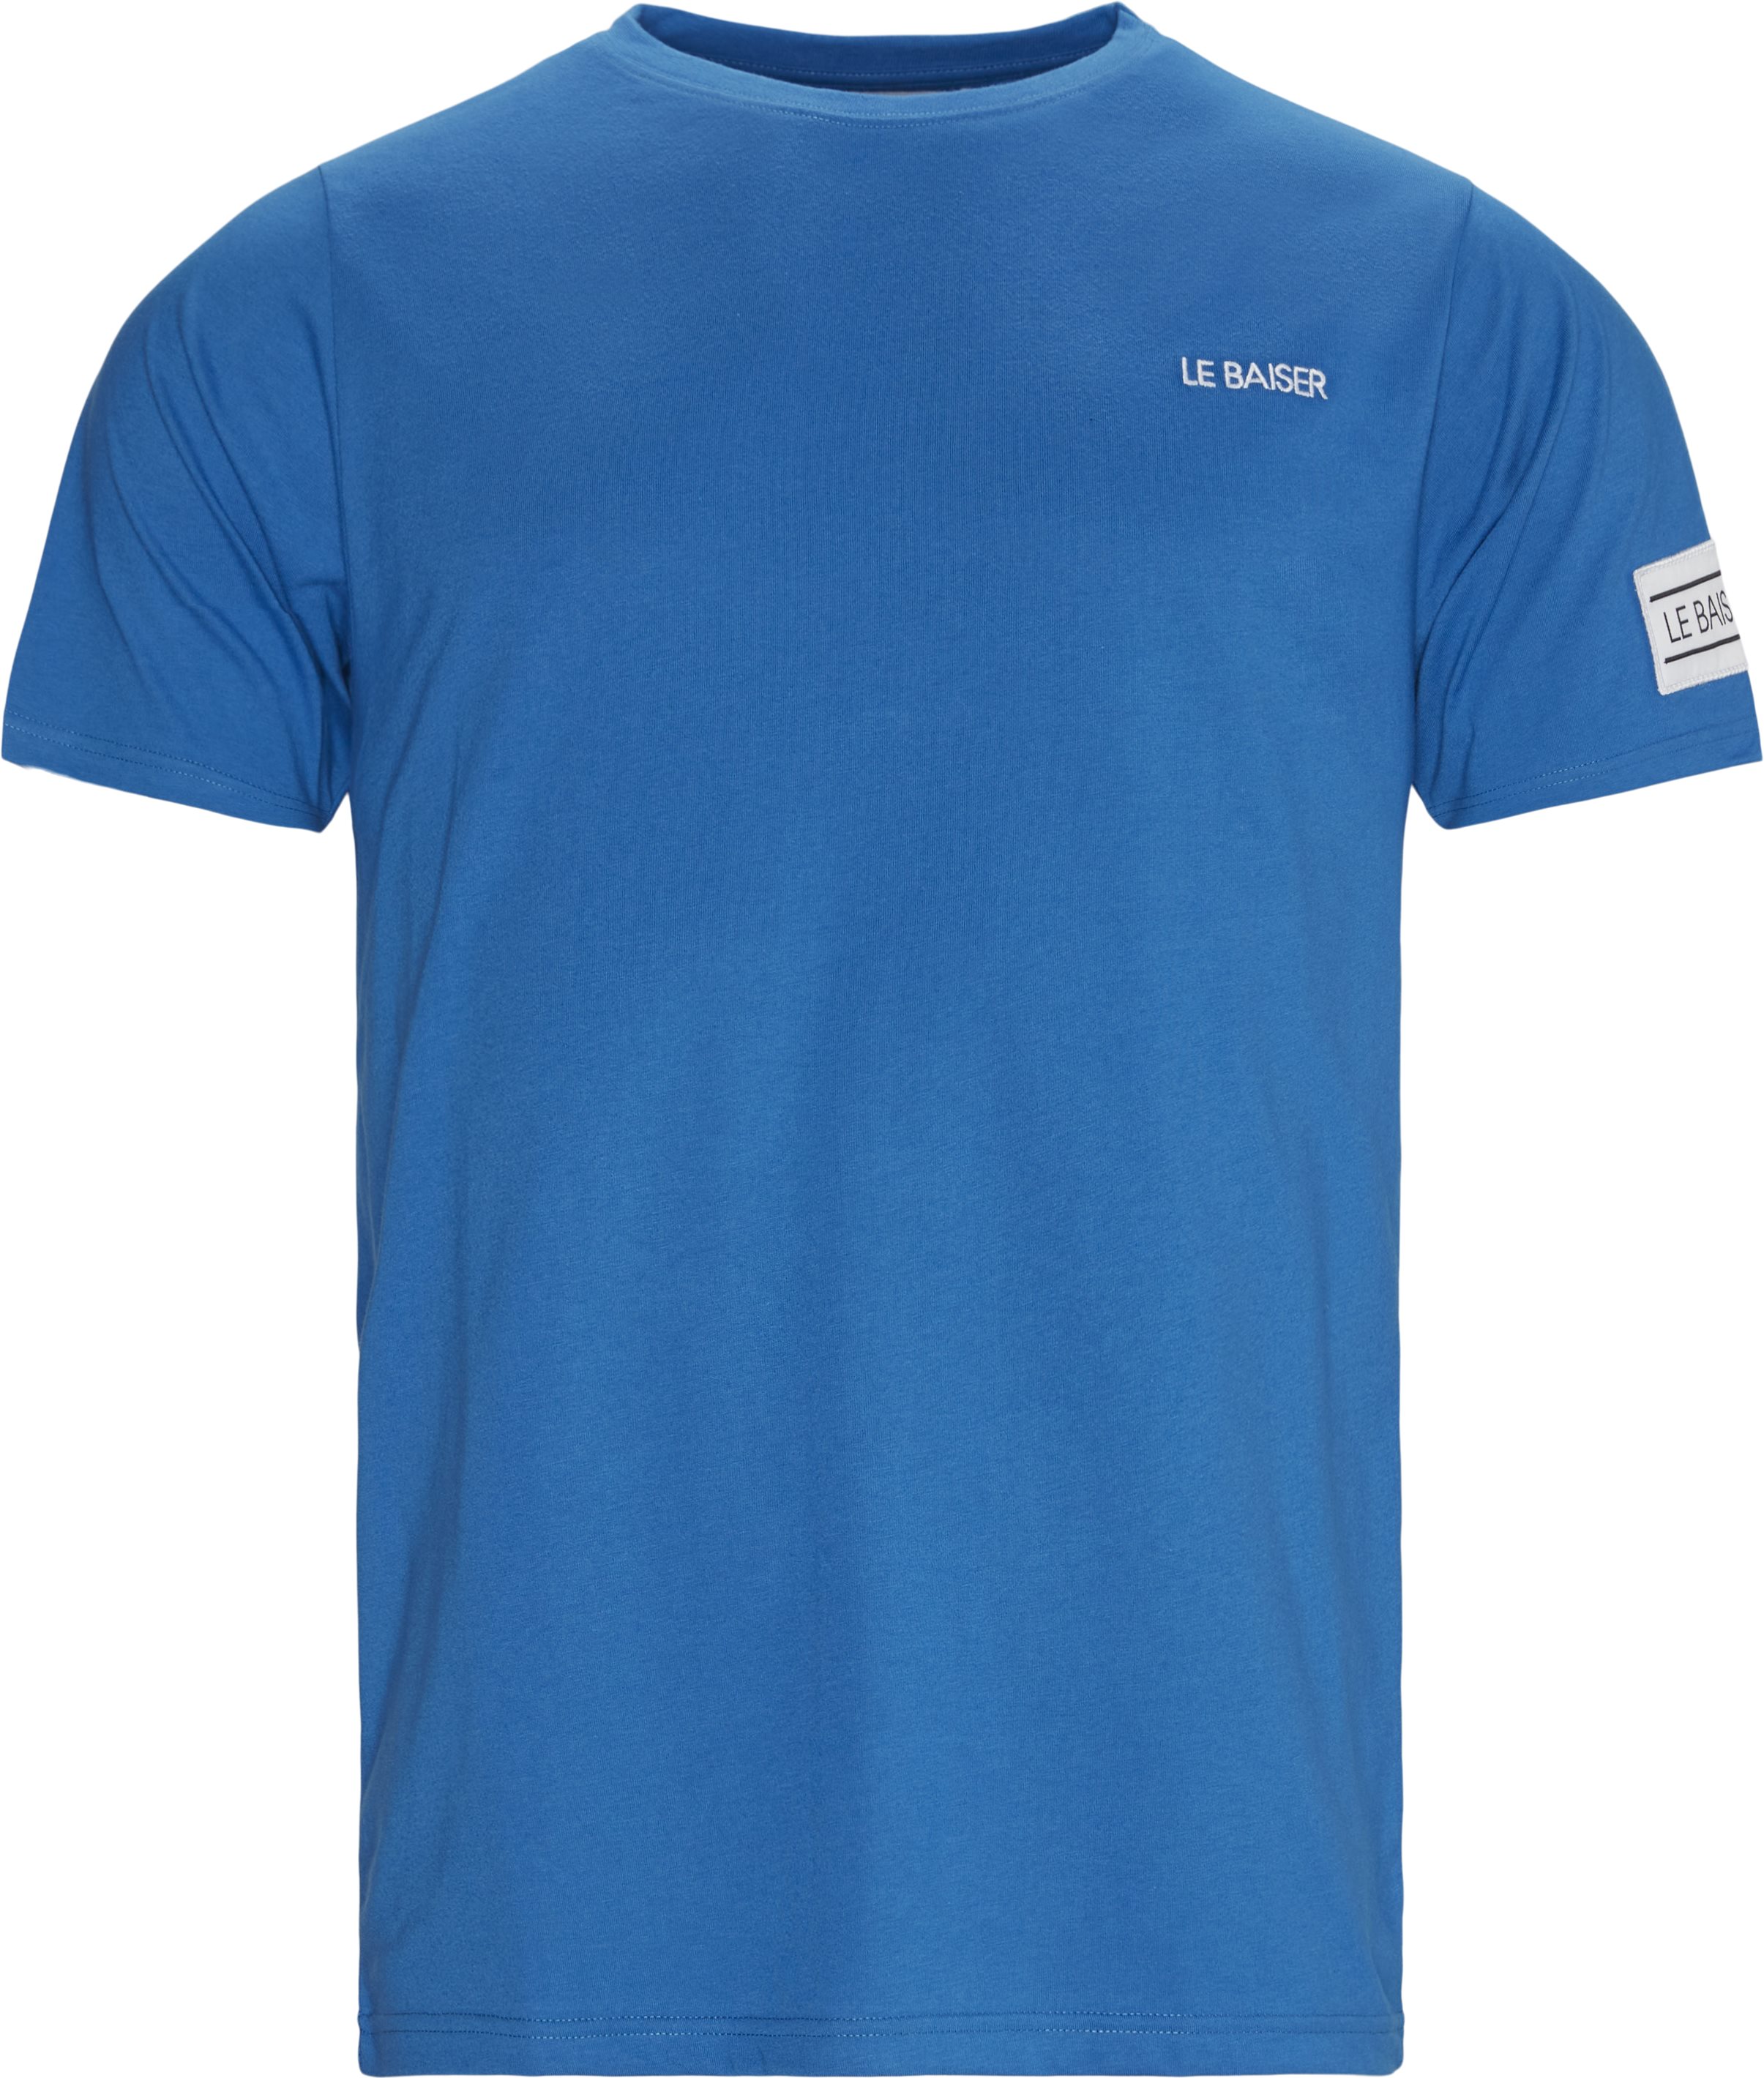 Bourg Tee - T-shirts - Regular fit - Blue